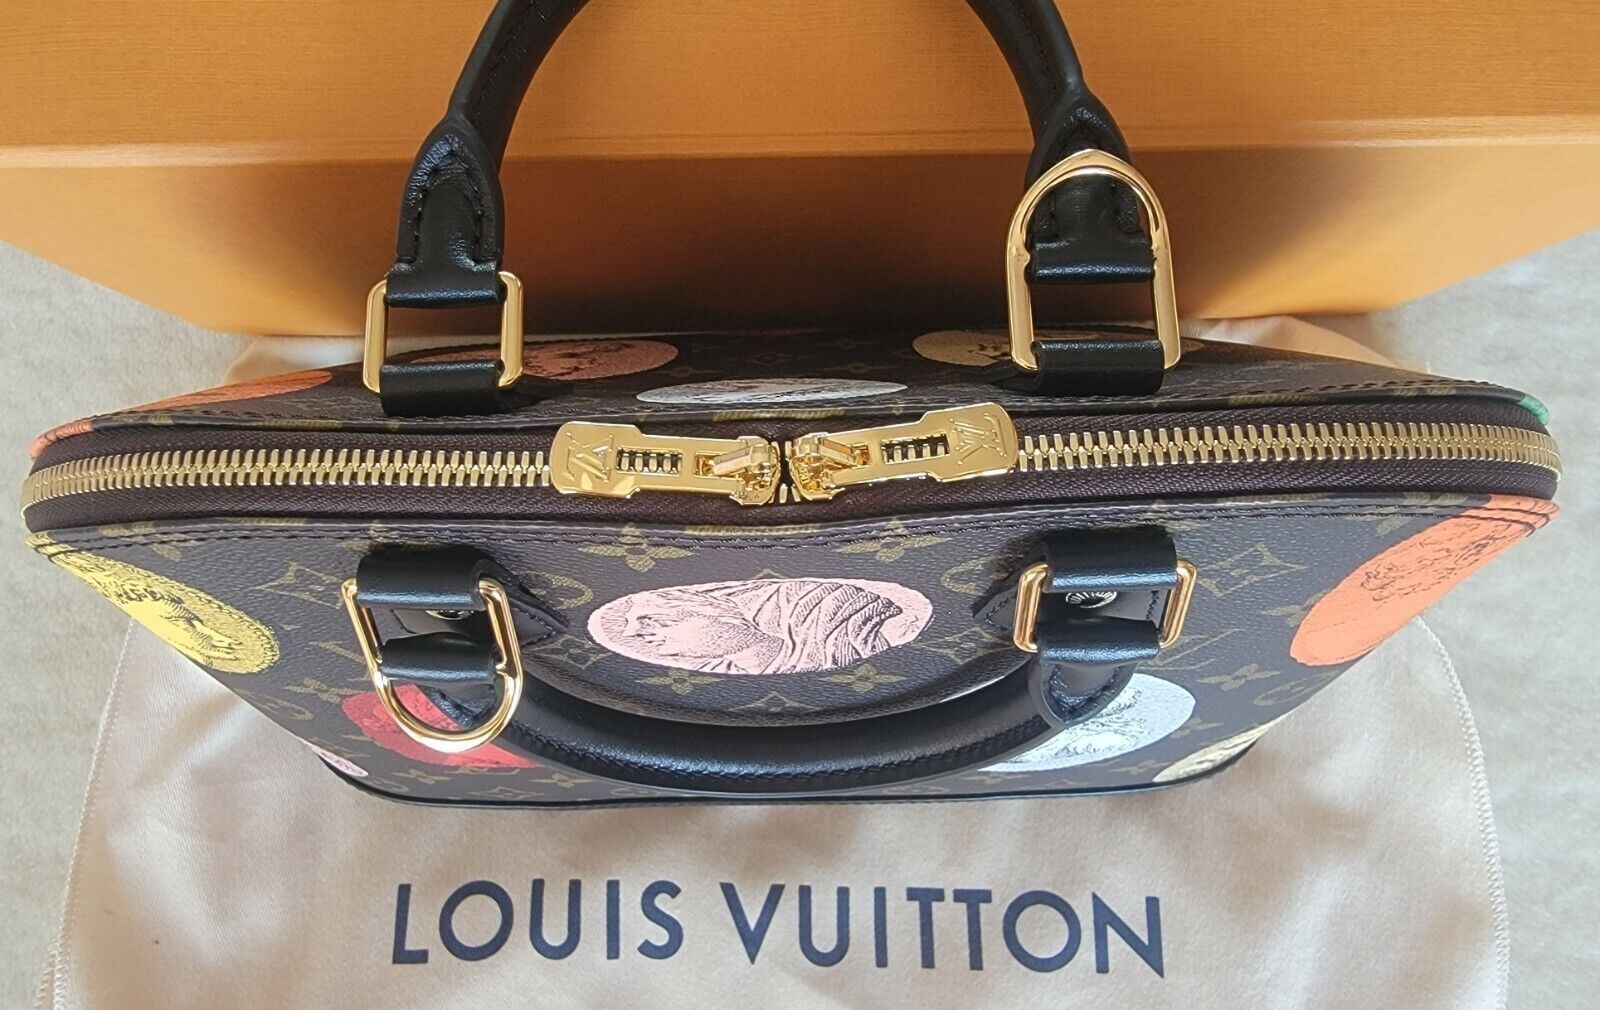 Louis Vuitton Monogram Alma BB Handbag in brown canvas